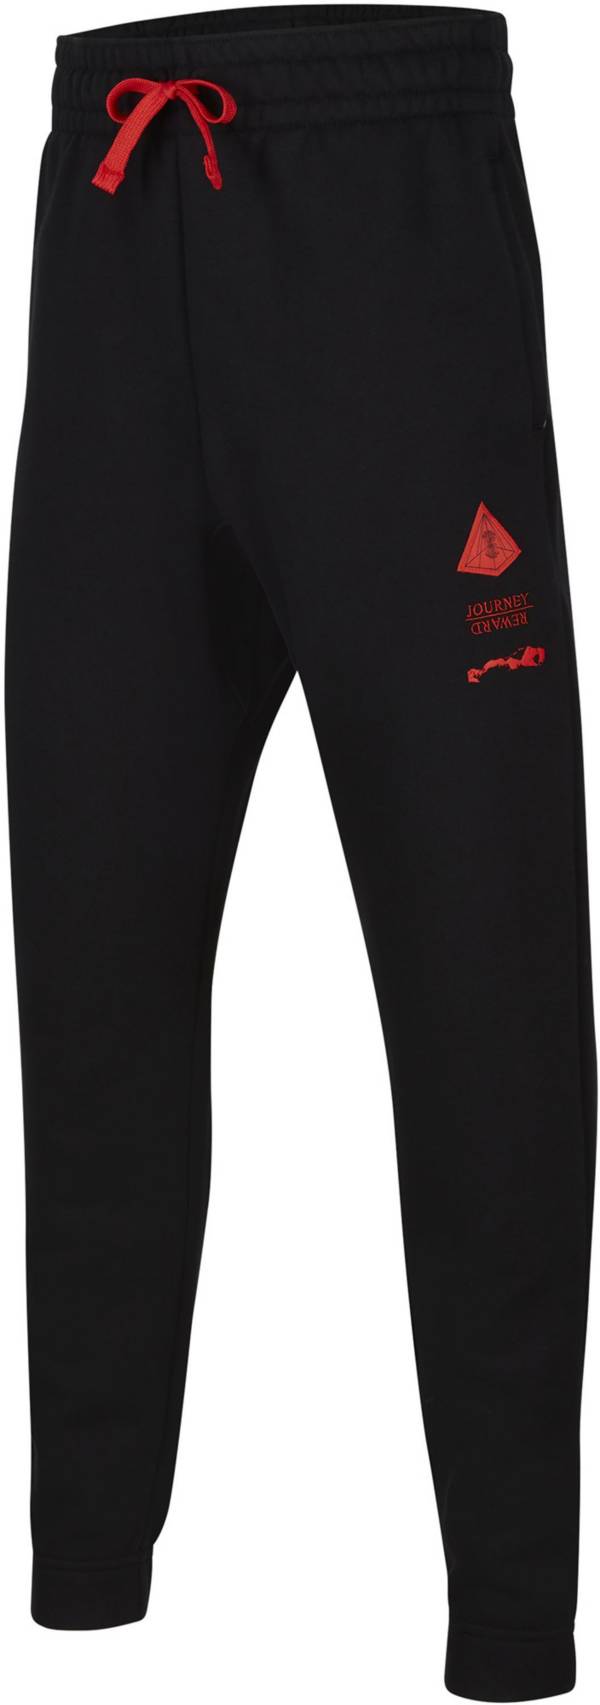 Nike Boys' Big Kid Kyrie Pants product image